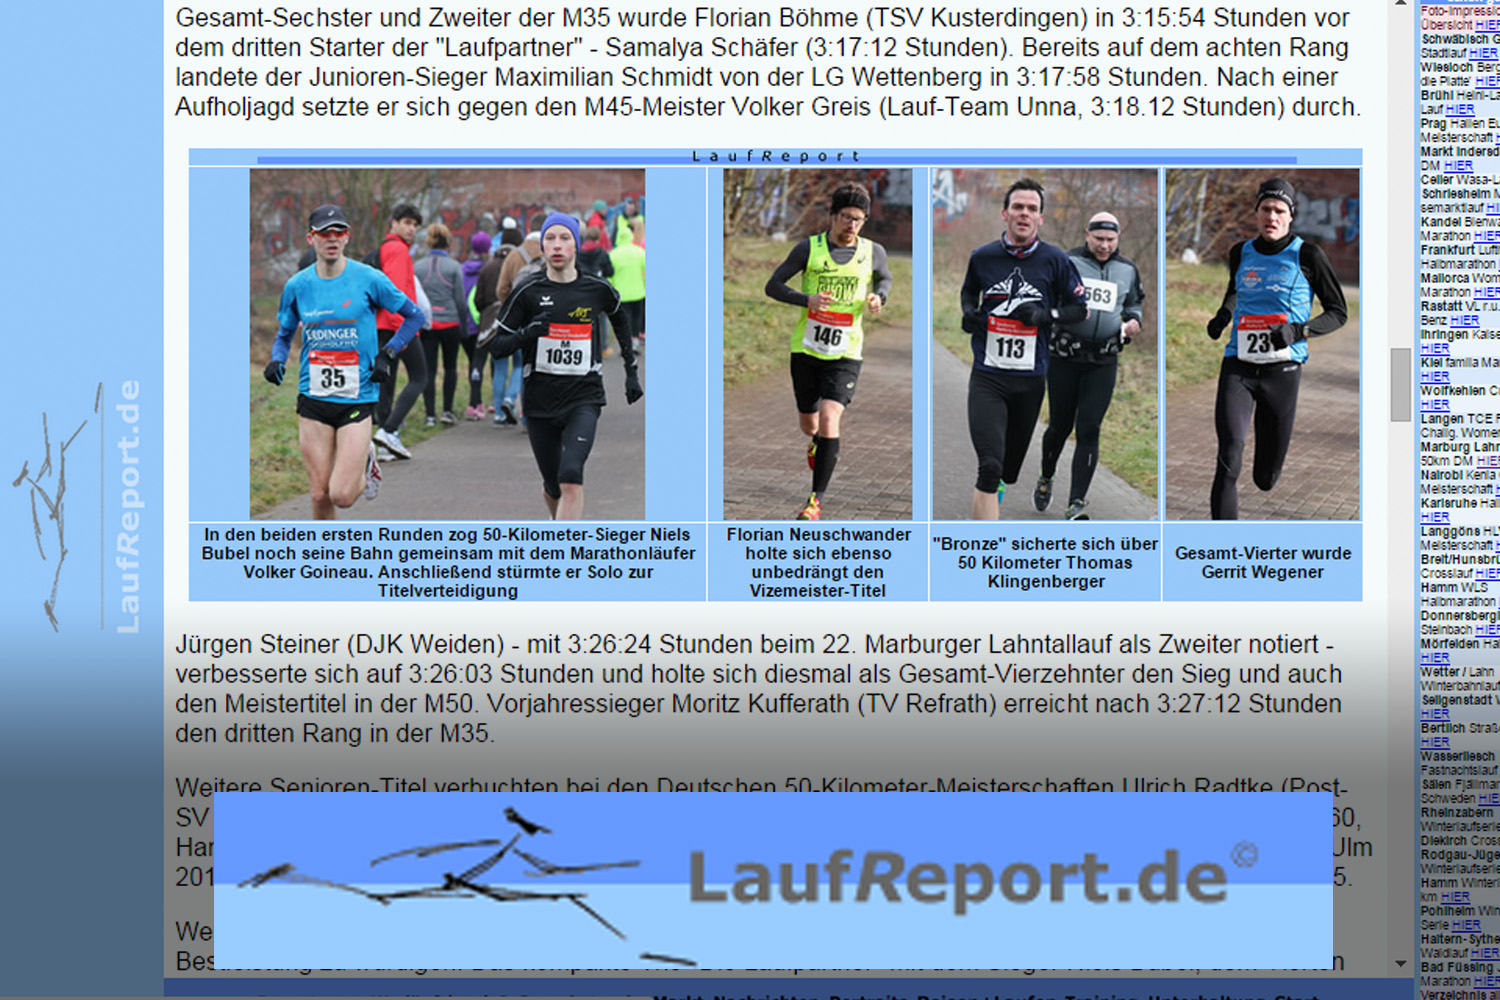 20150228-laufreport-marbuger-lahntallauf-50km